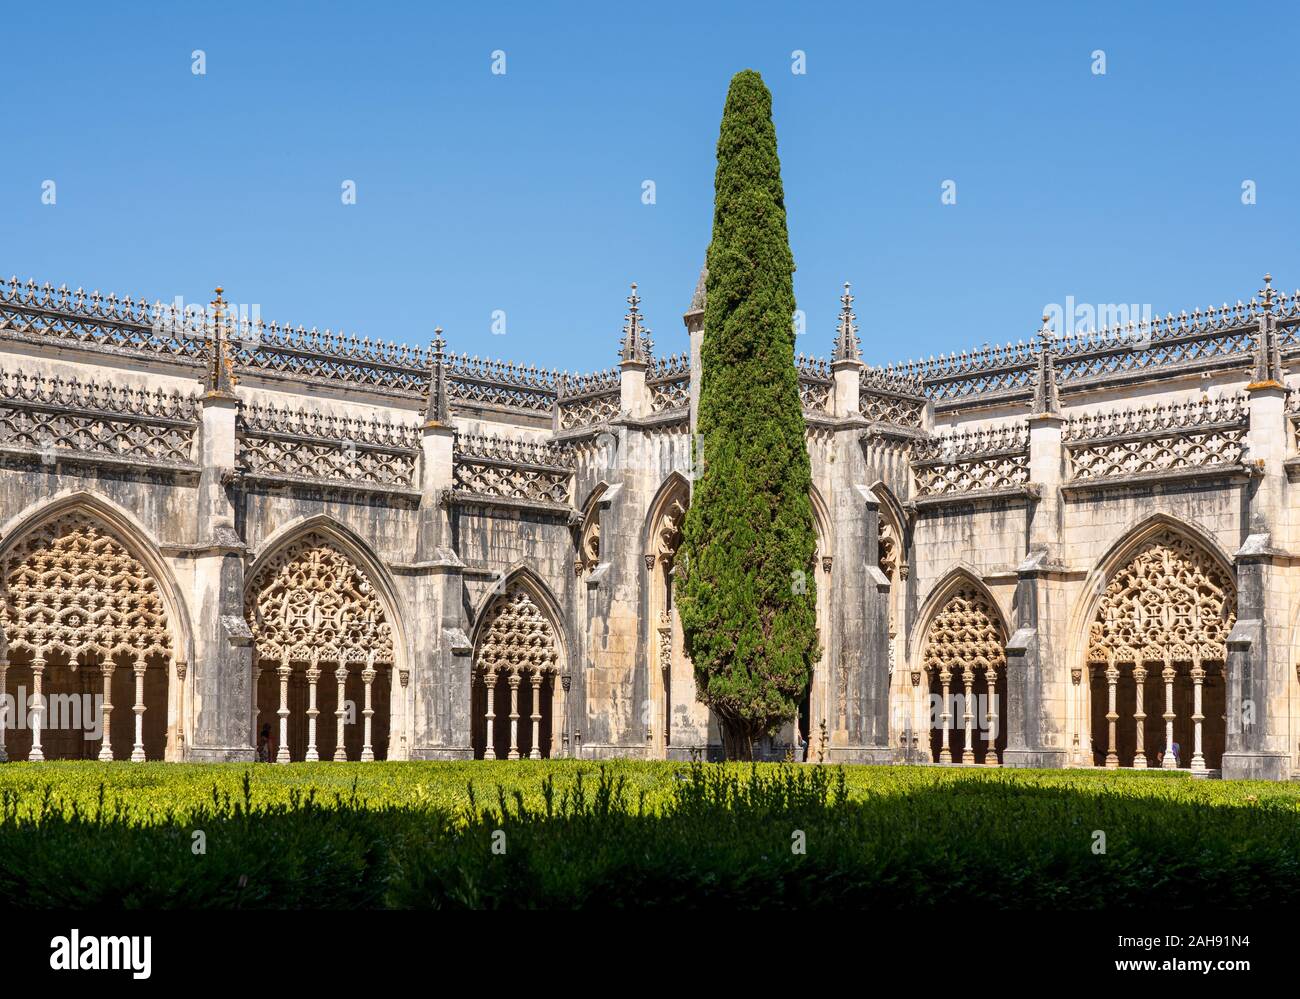 Leiria, Portugal - 20 August 2019: Ornate arches around the cloisters at the Batalha Monastery near Leiria in Portugal Stock Photo